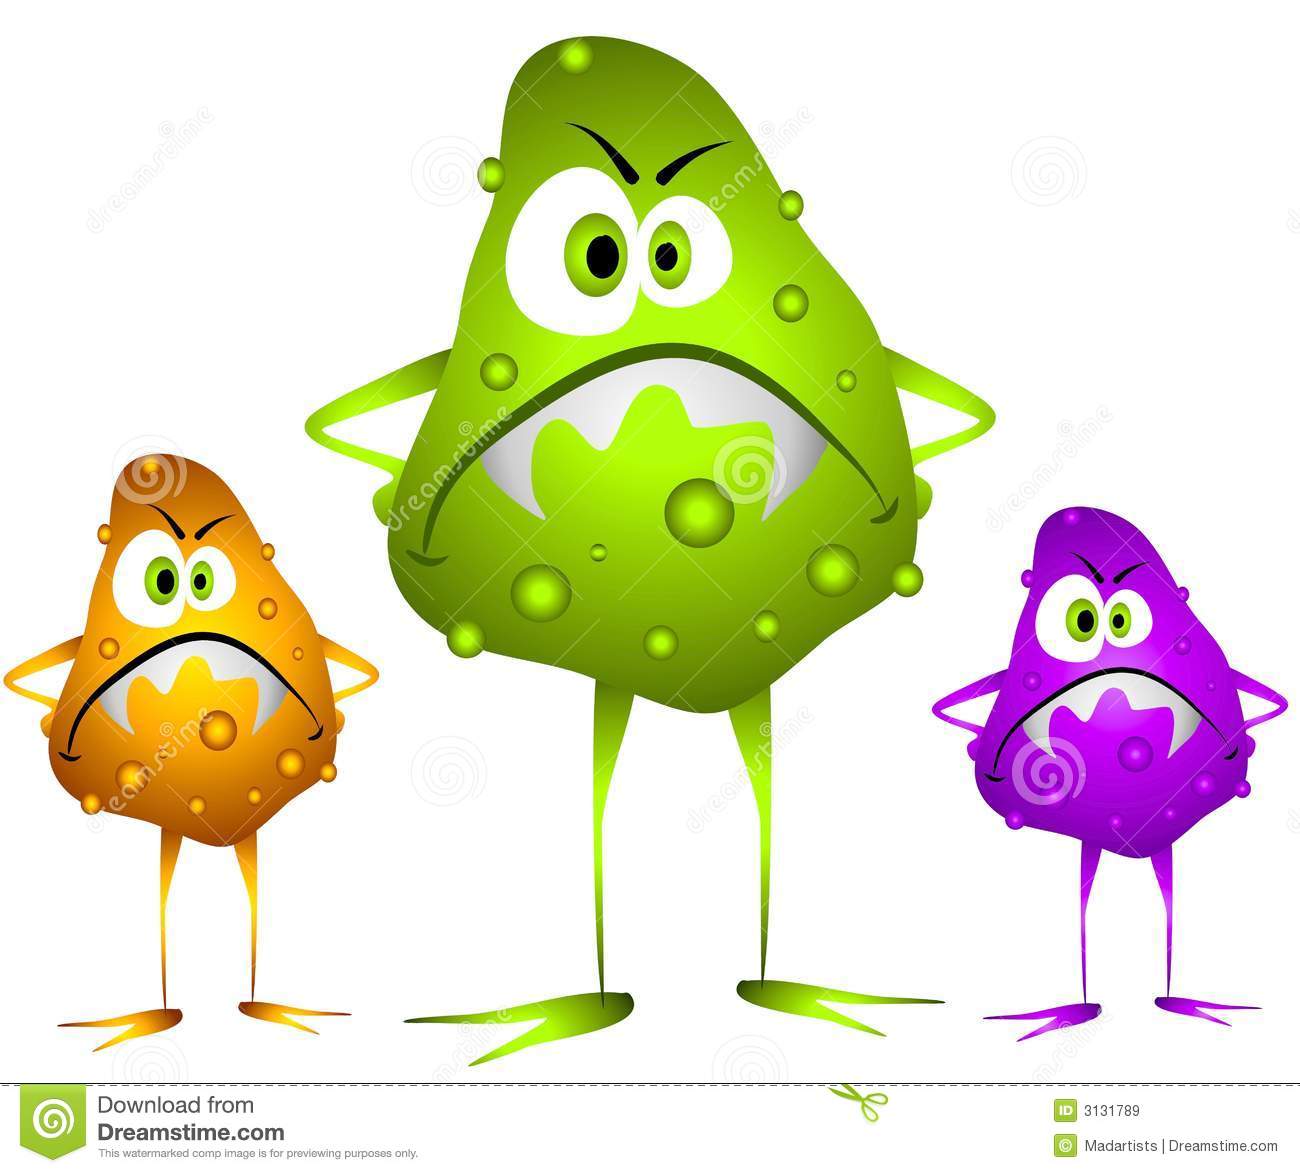 Art Cartoon Illustration Of 3 Nasty Looking Germs Viruses Or Bacteria